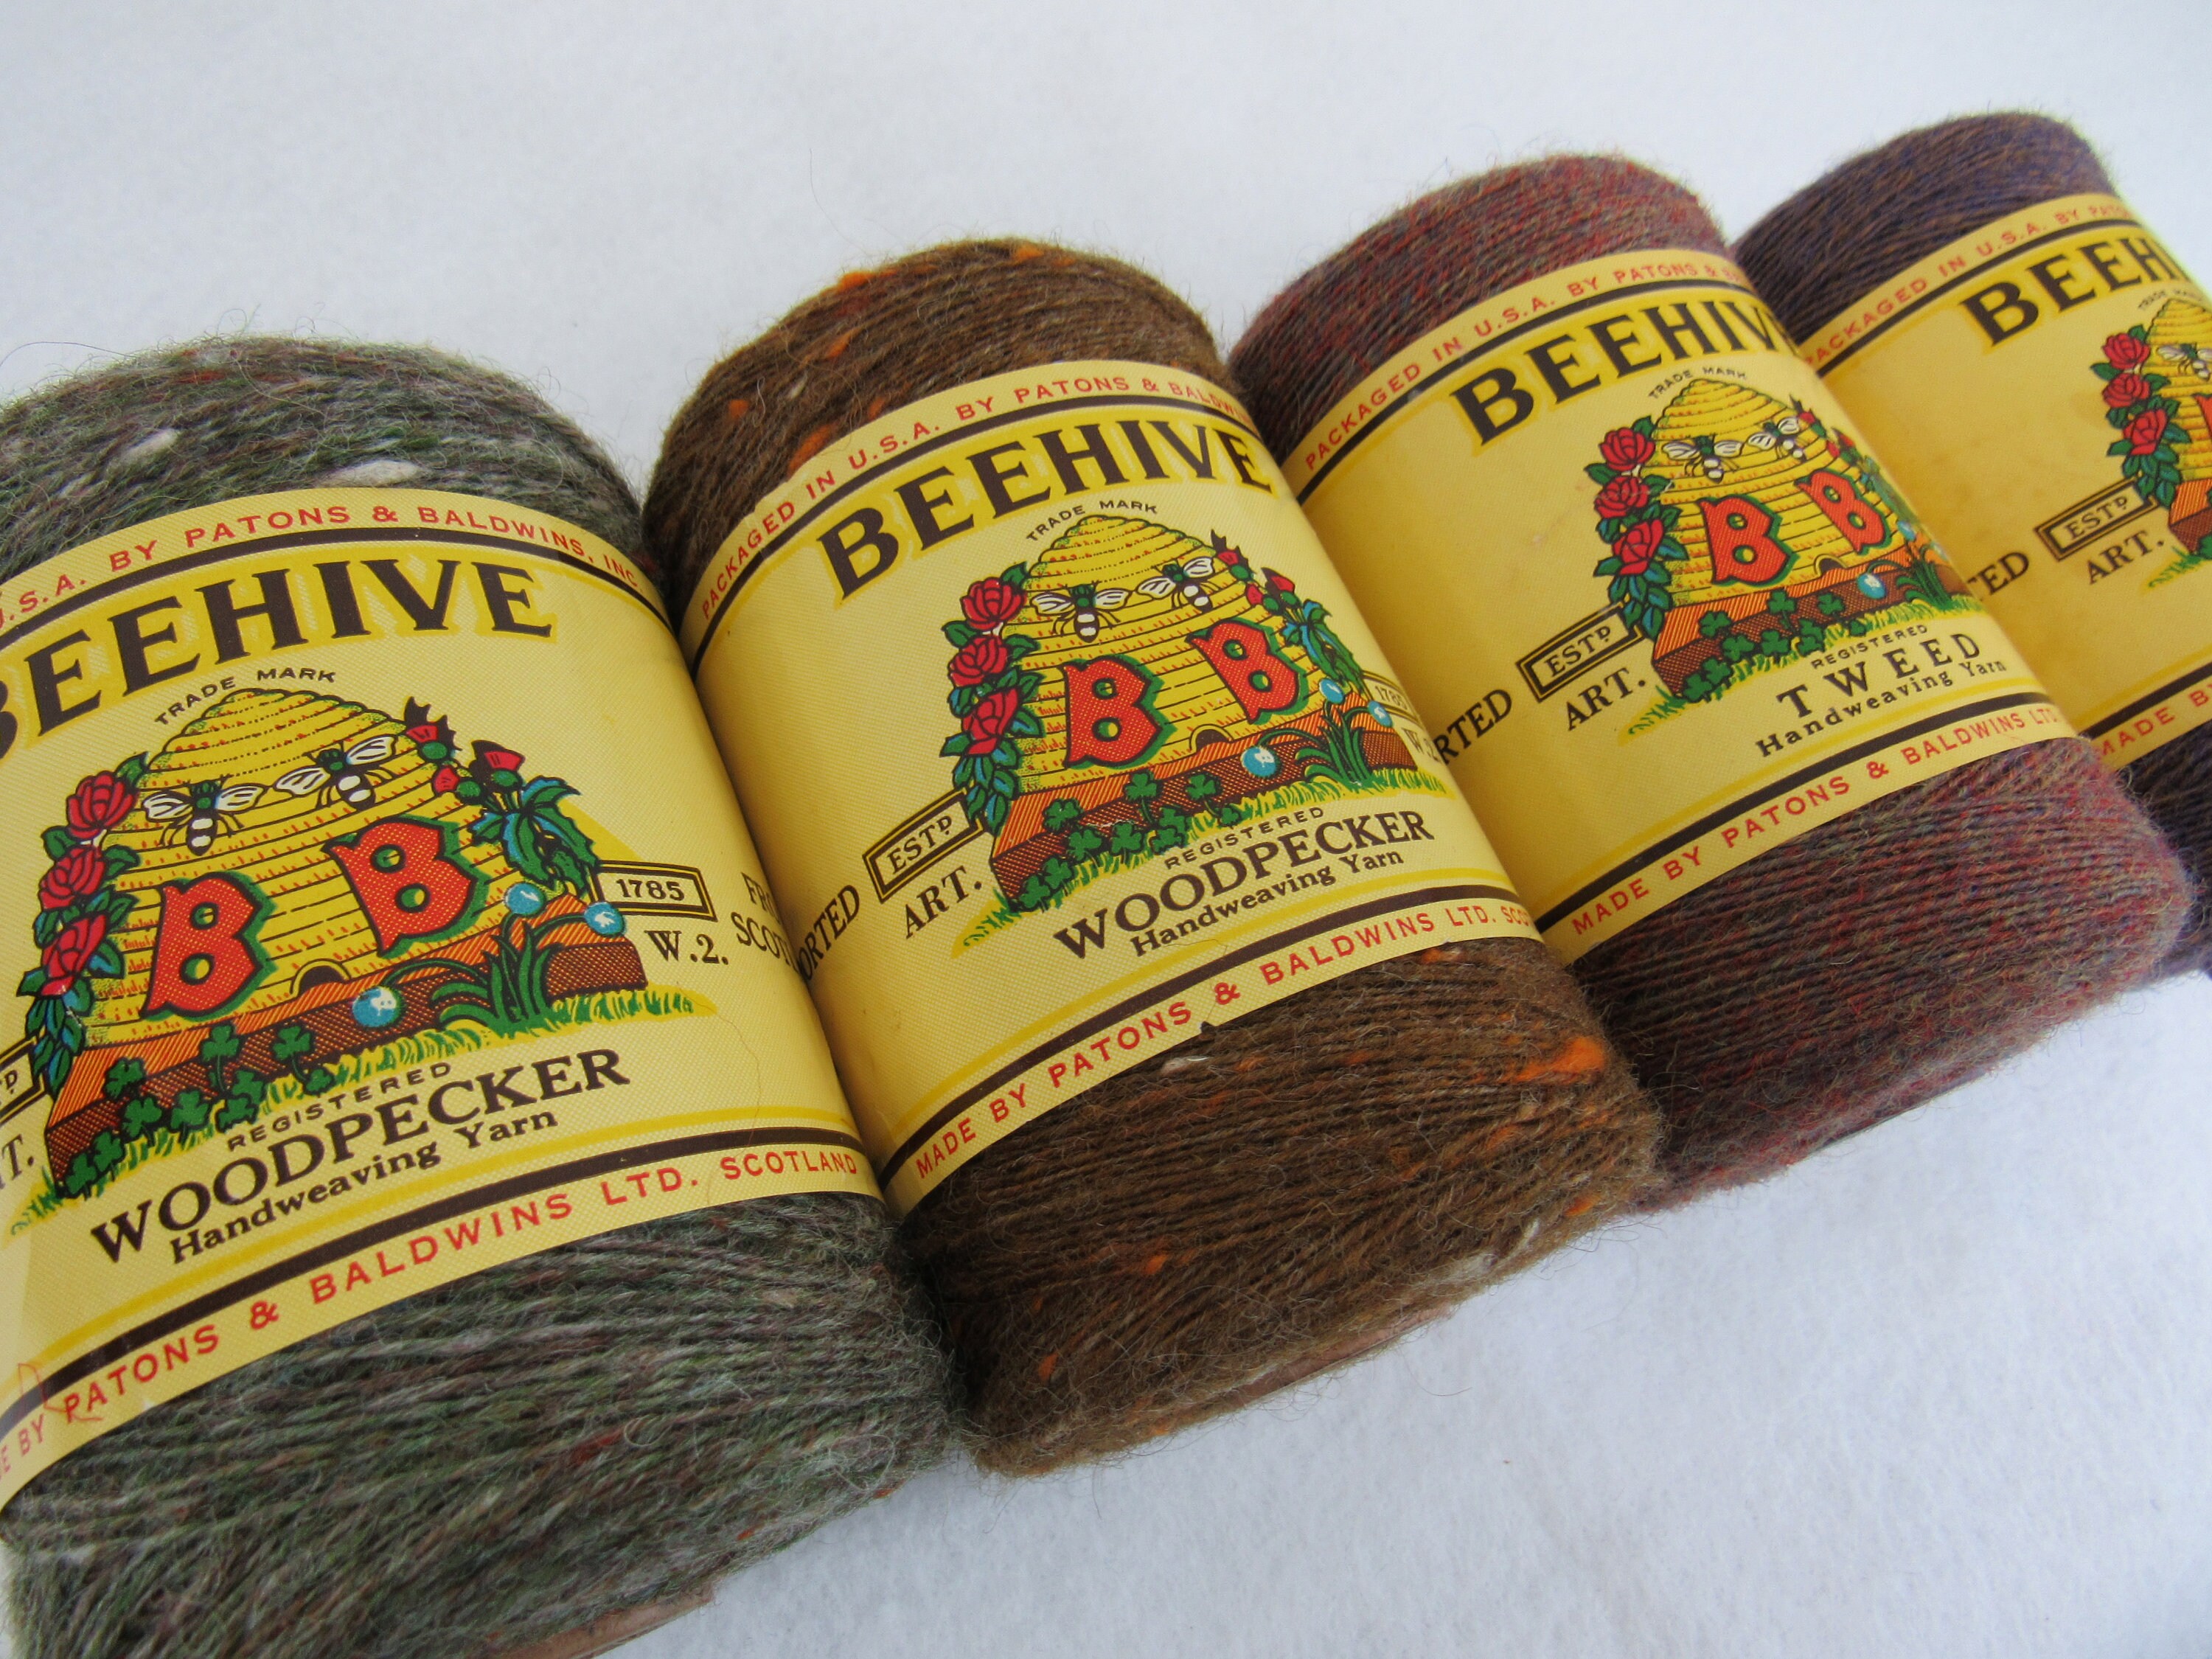 Sky Drops  Shop Yarn Online Today - Beehive Wool Shop